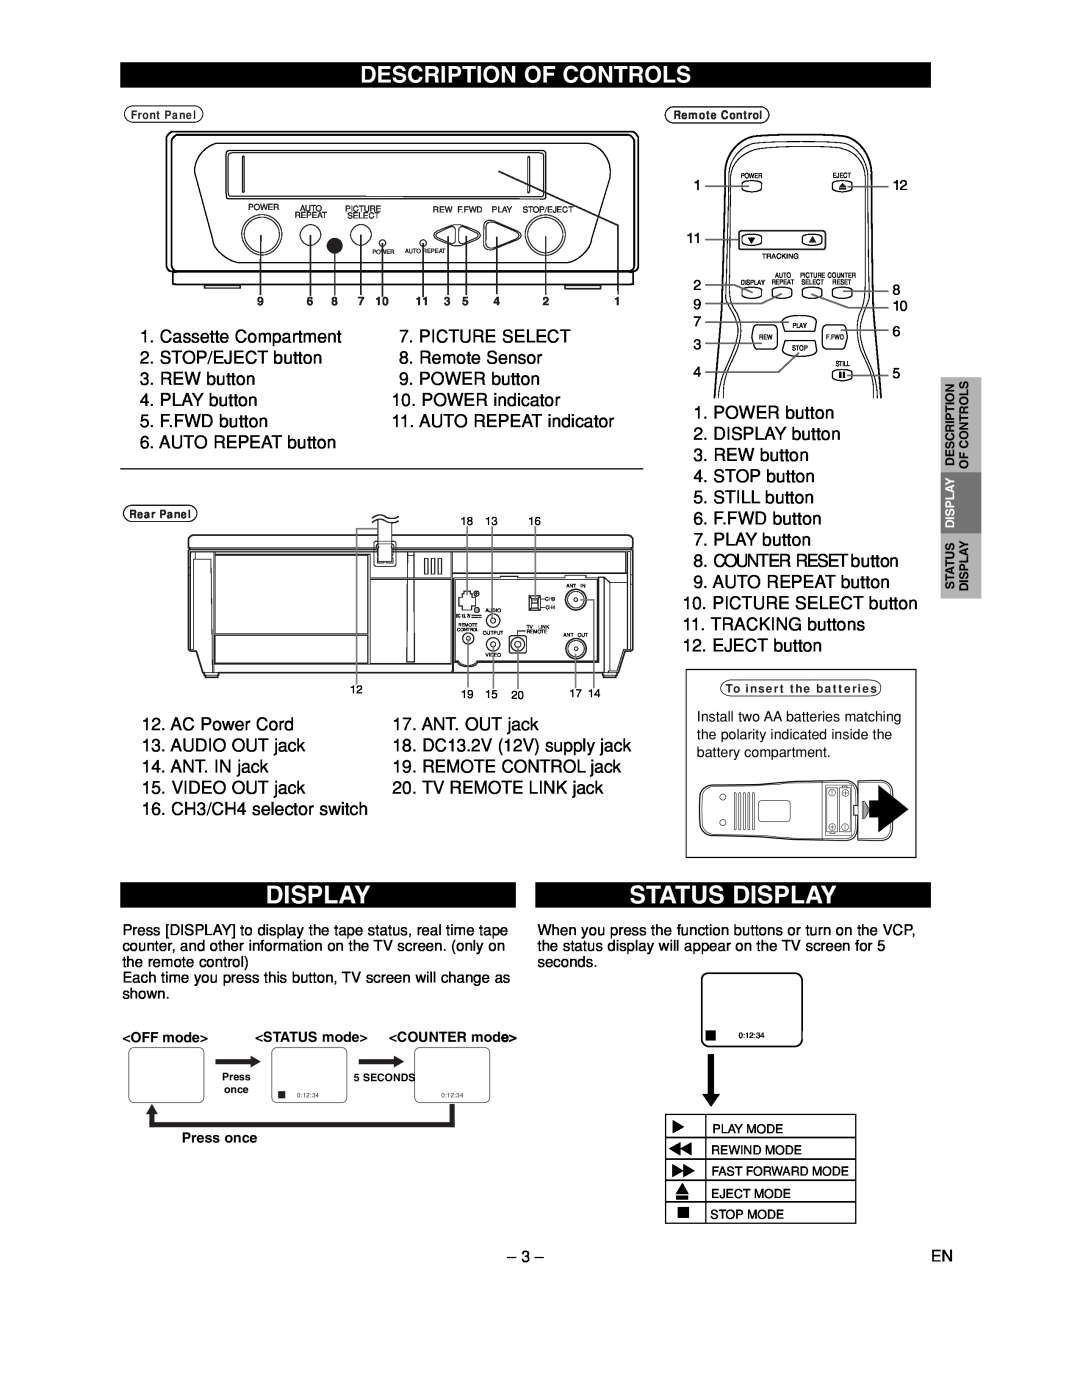 FUNAI MFV210C warranty Status Display, Description Of Controls 